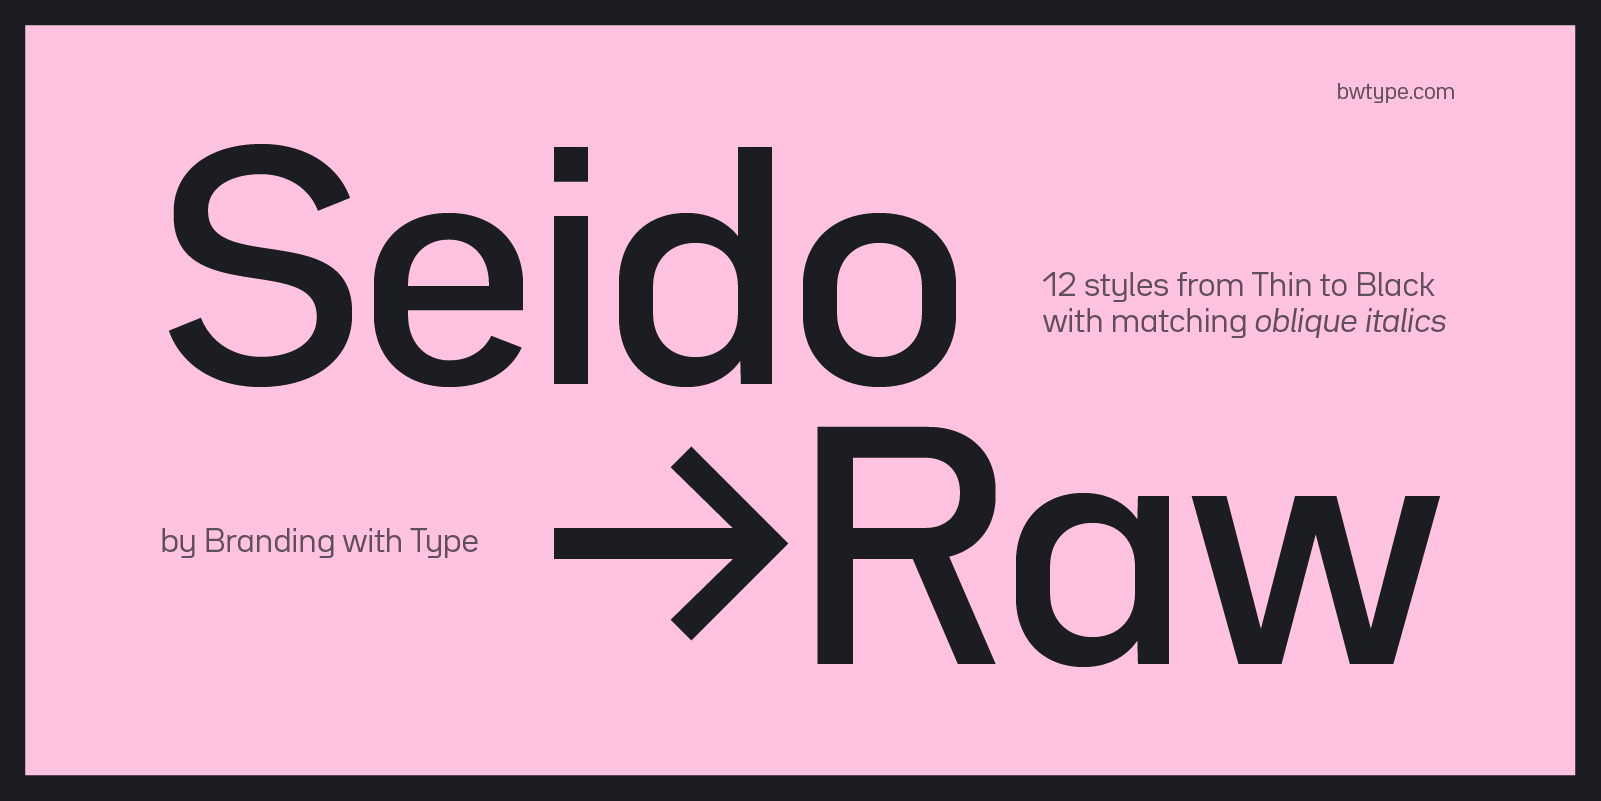 New font release: Bw Seido Raw